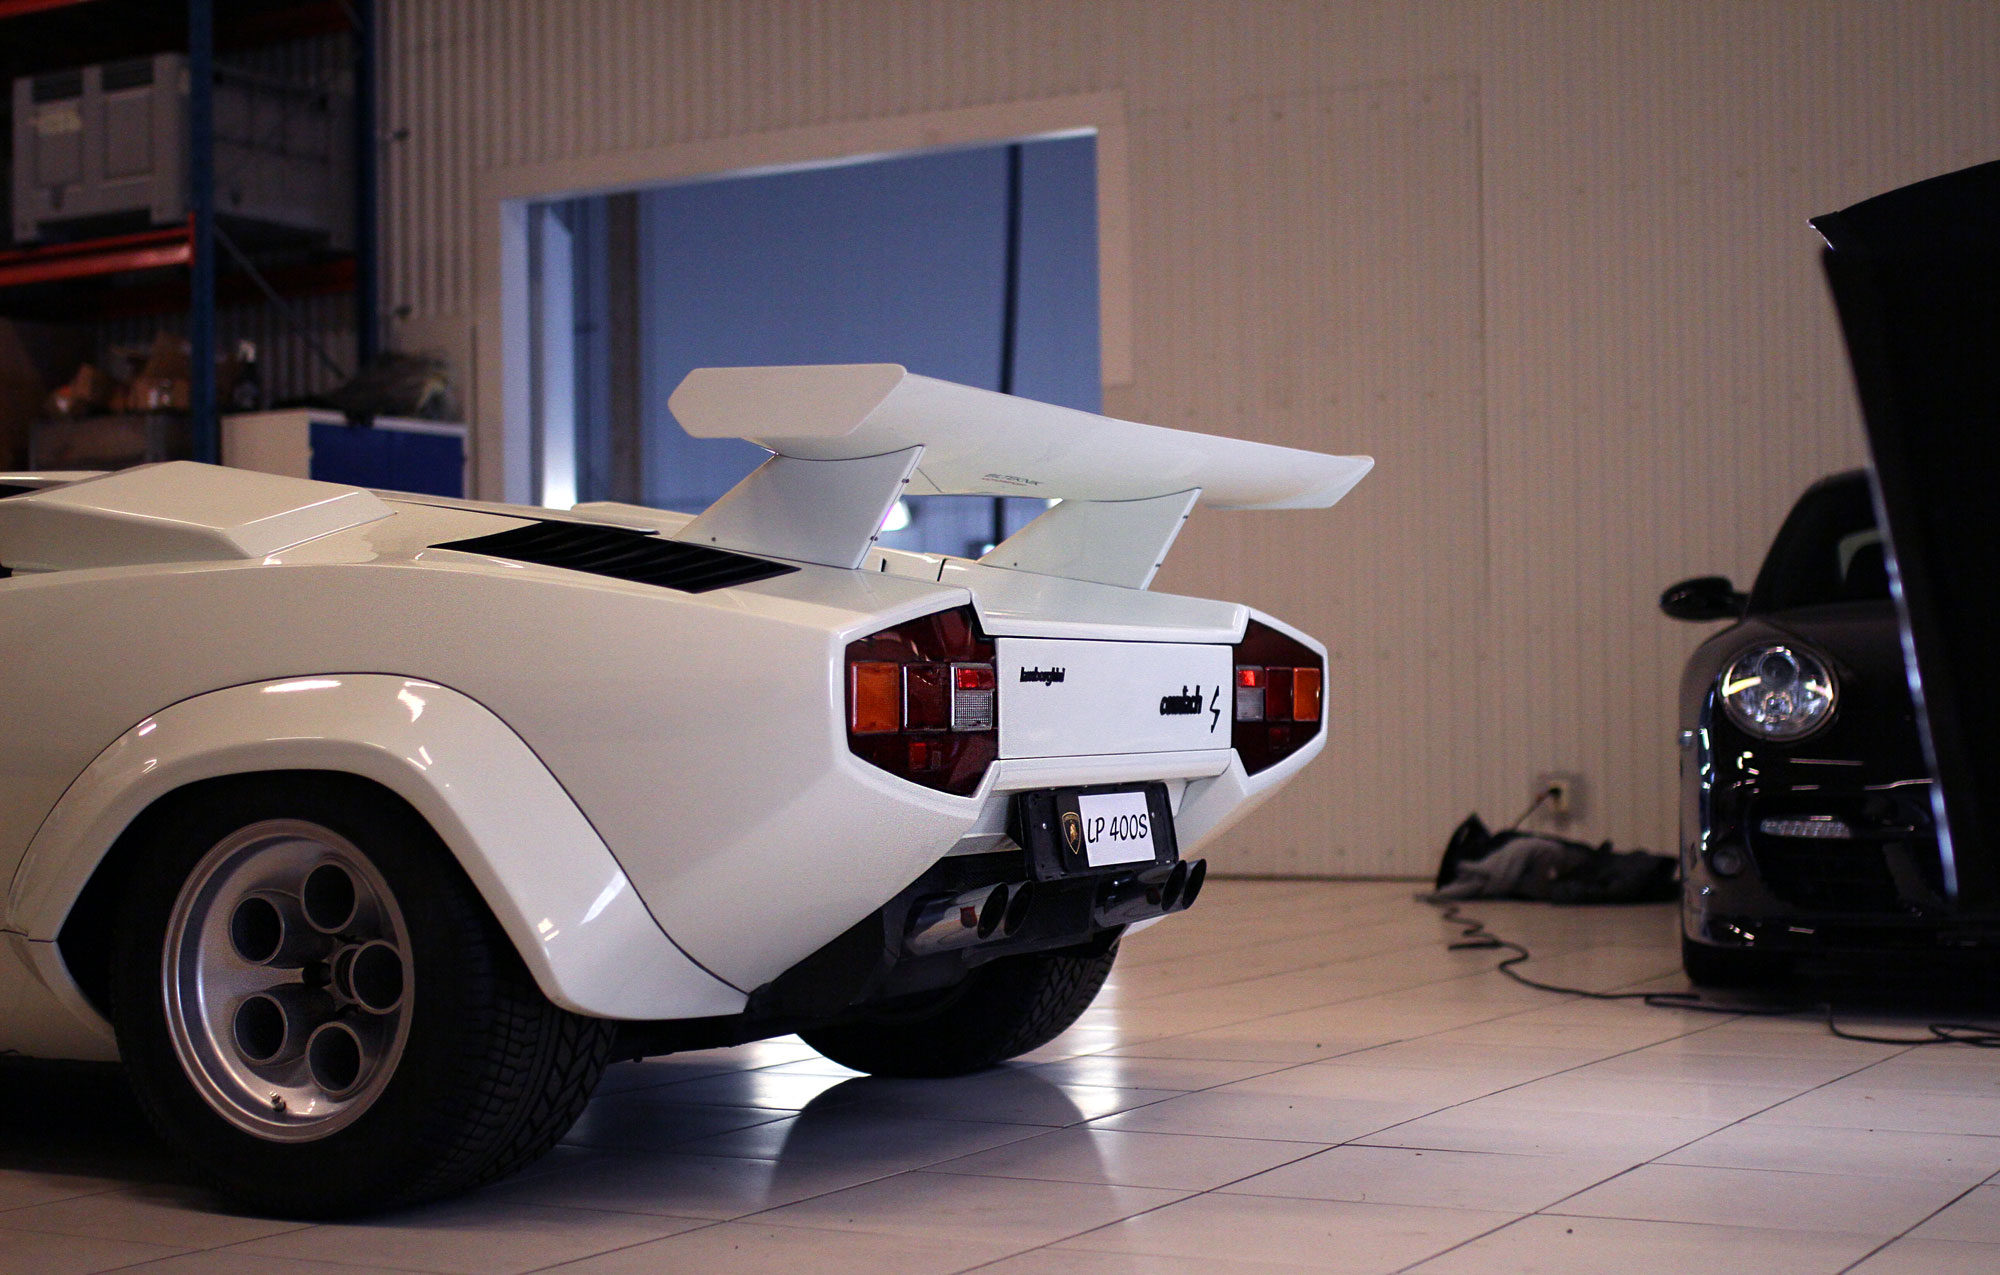 Lamborghini Countach LP400s in the garage spotlight for a photoshot.